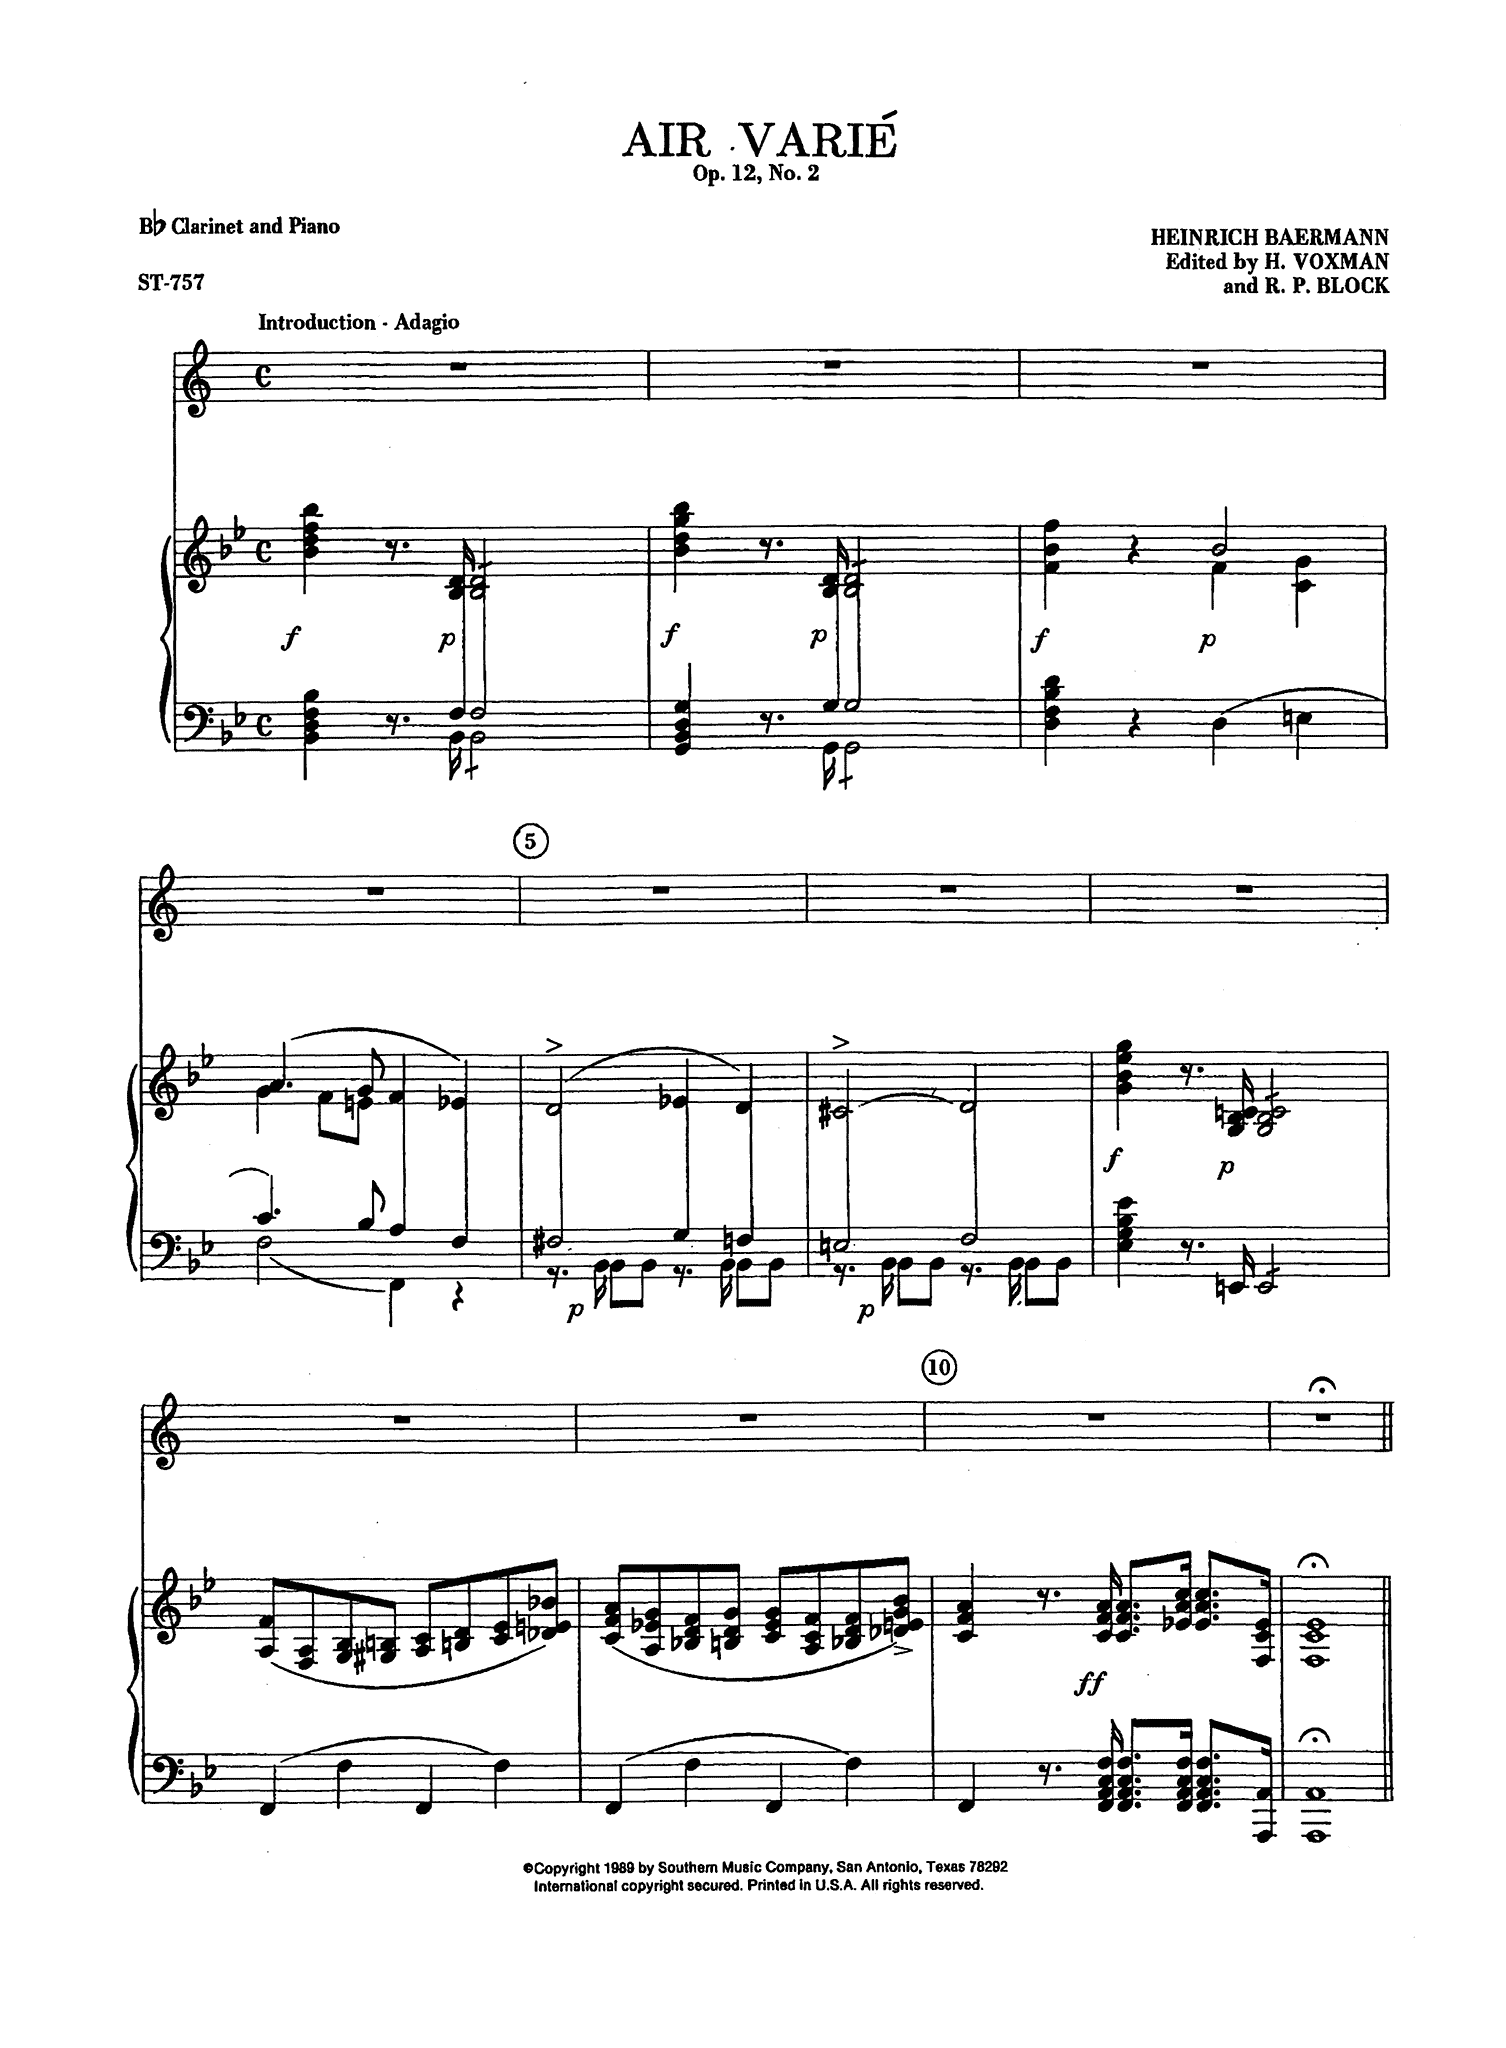 Baermann, Heinrich: Air varié, Op. 12 No. 2 clarinet and piano score